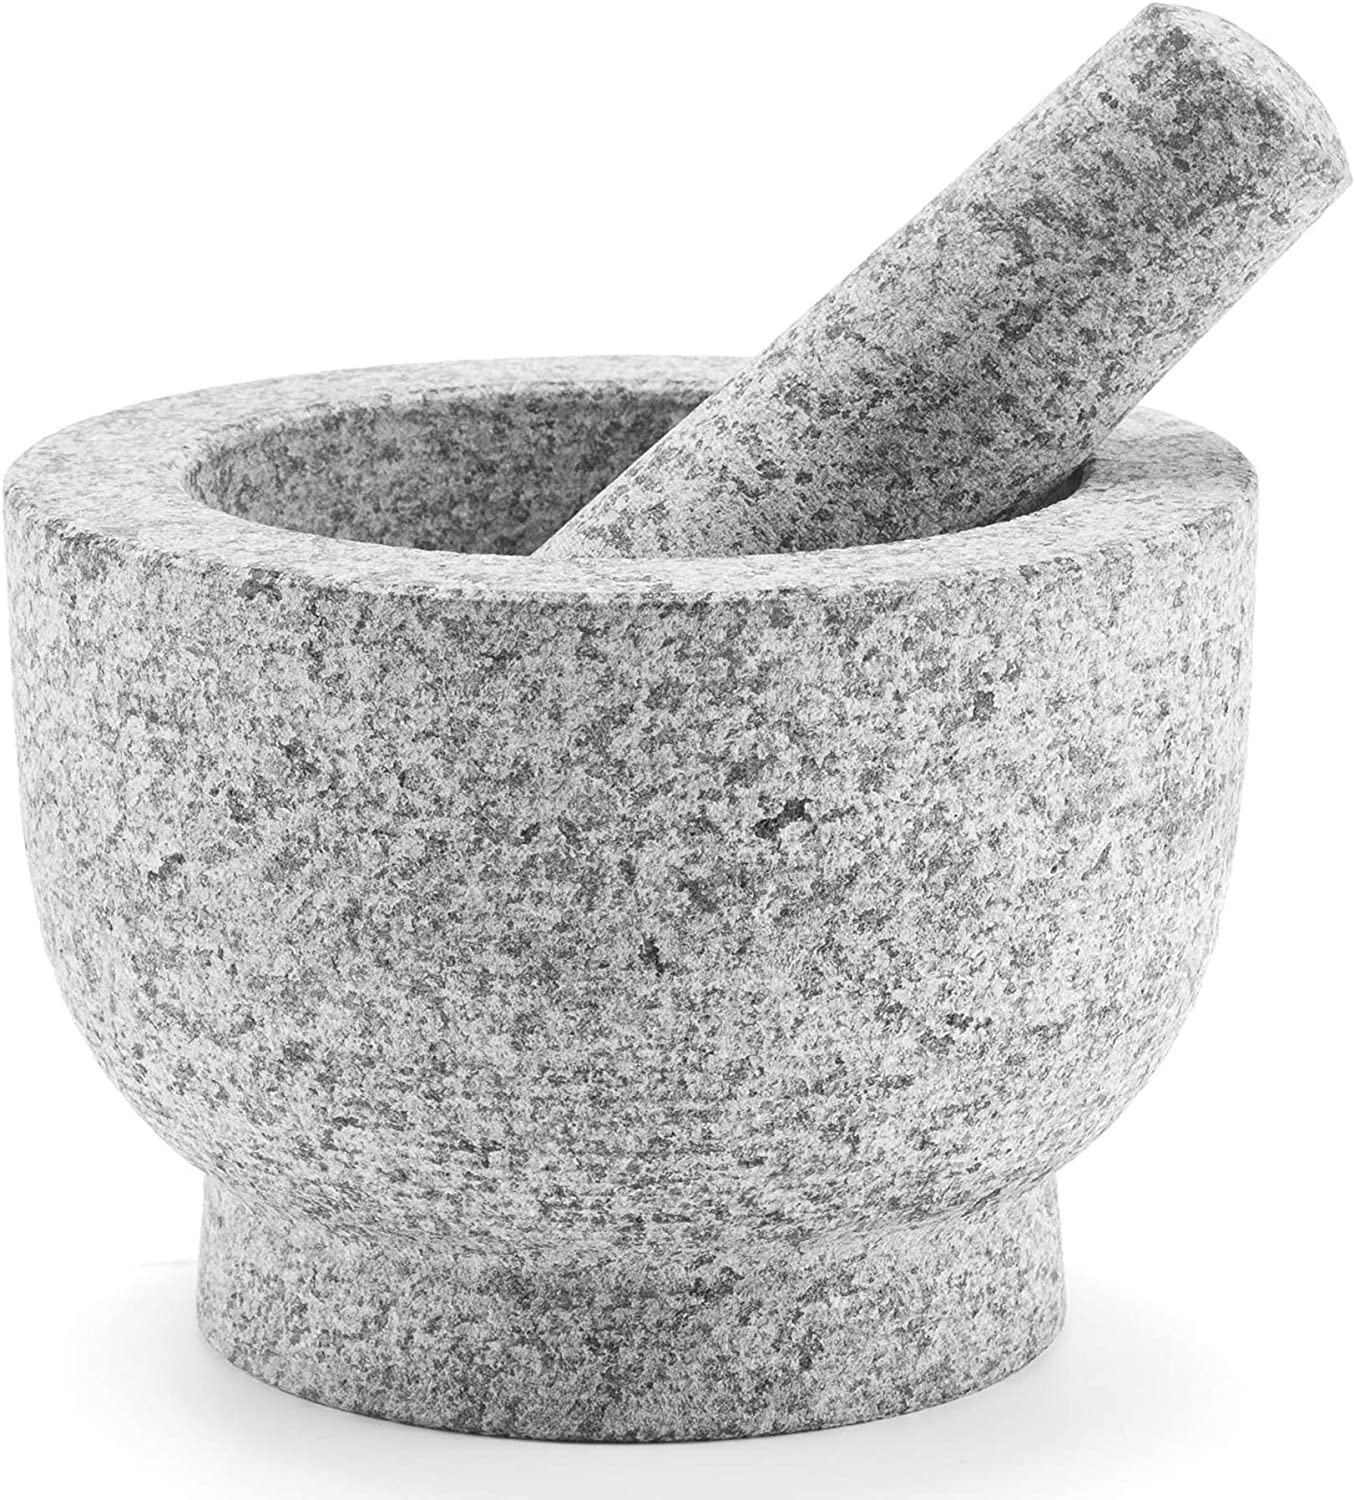 Amazon.com: CO-Z Granite Mortar and Pestle Set , 6 Inch - 2 Cup $13.79